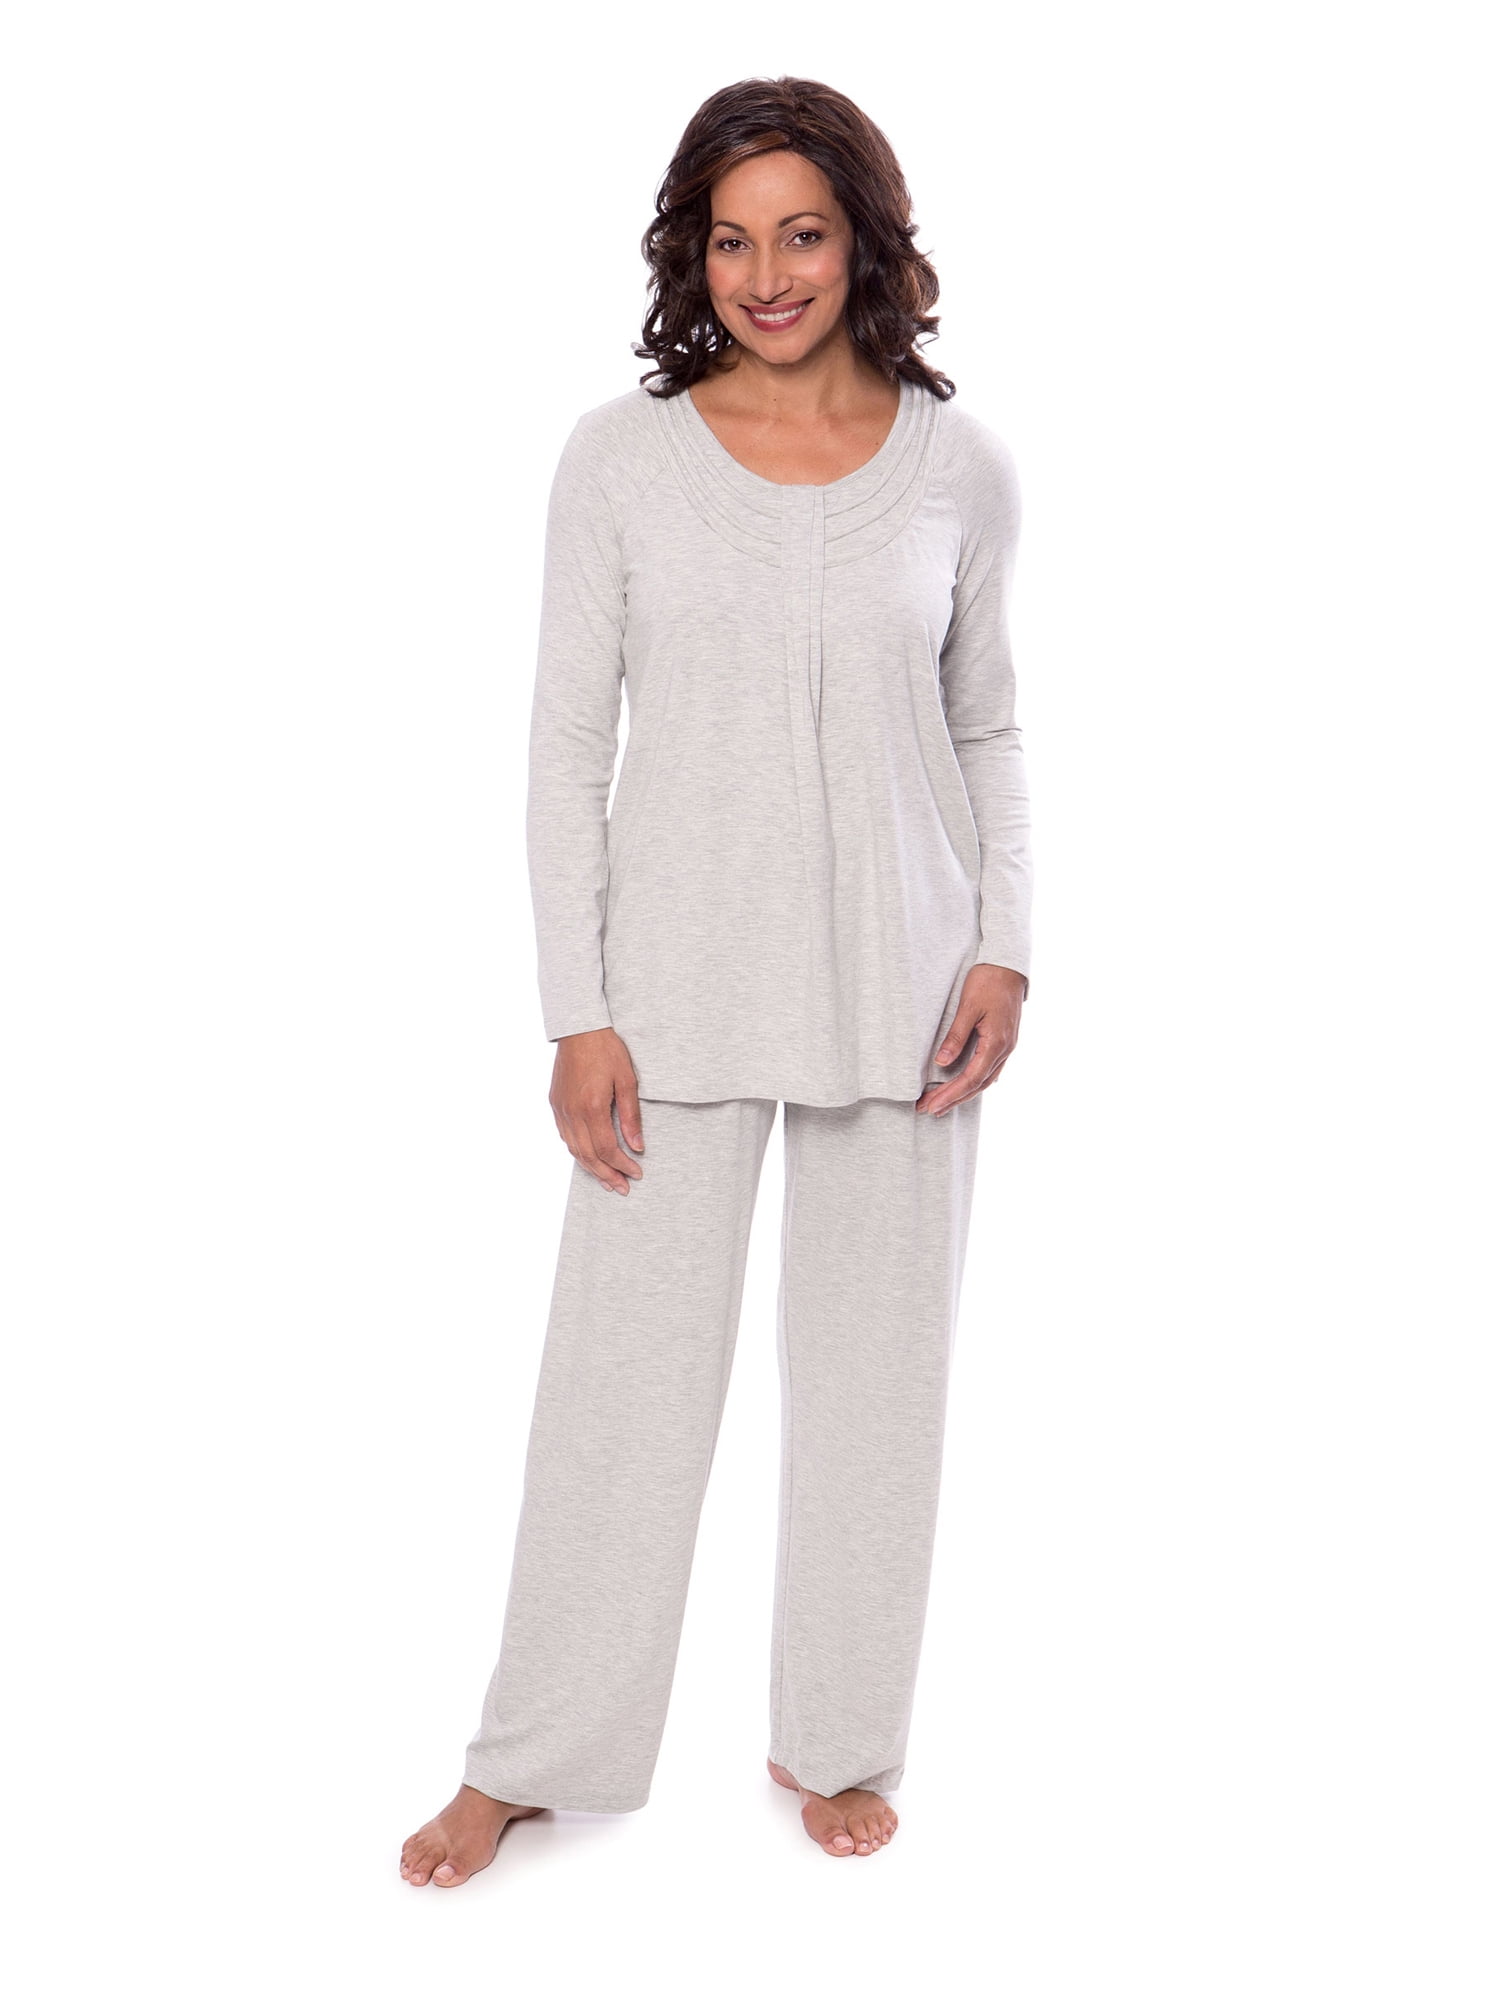 Women's Long Sleeve PJs in Bamboo Viscose (Replenish) Cozy Pajama Set ...